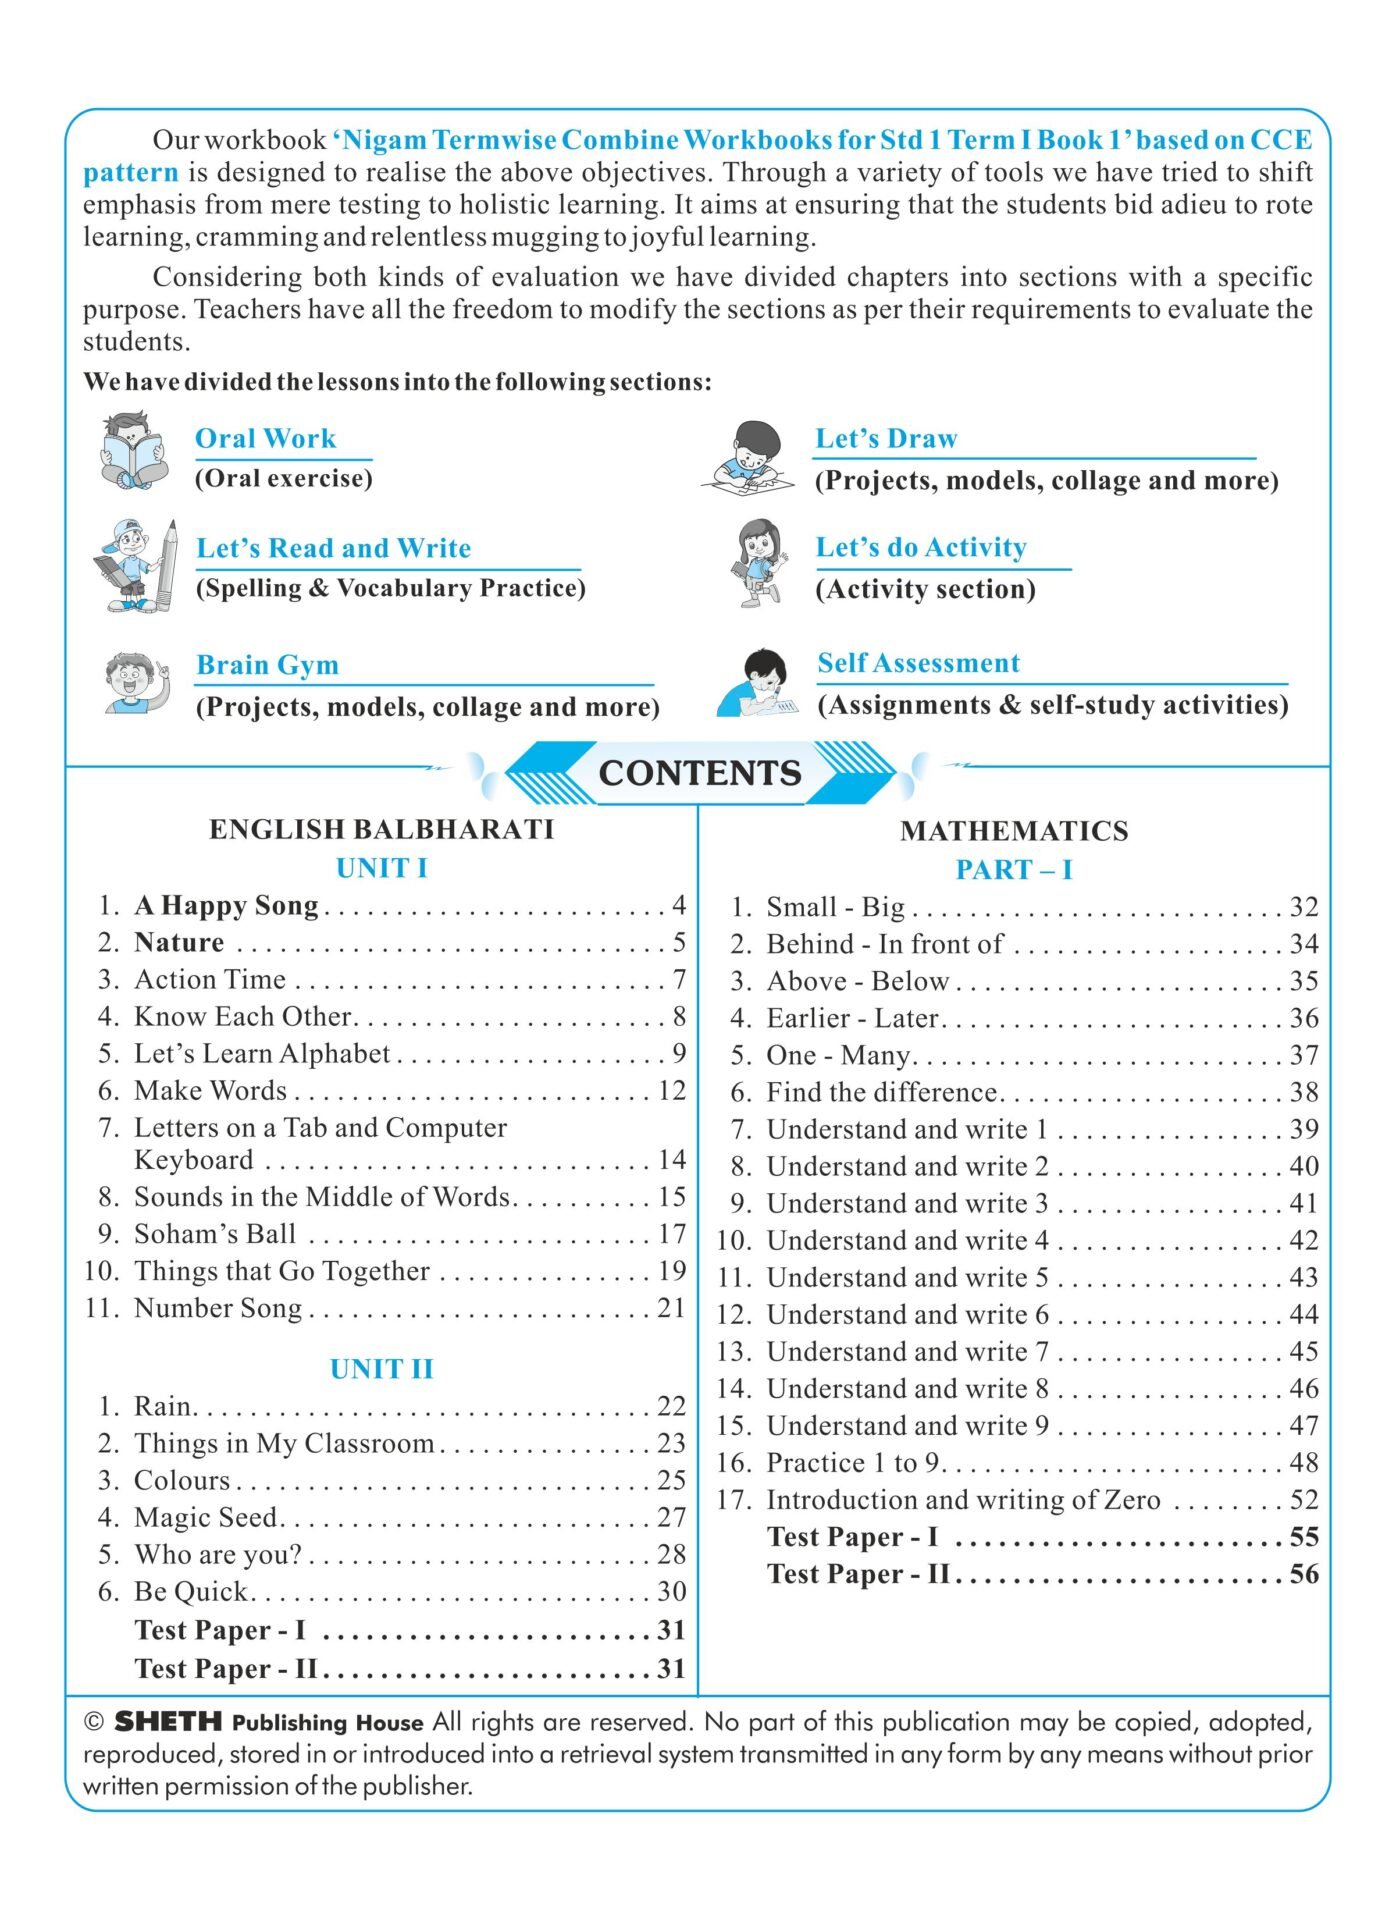 CCE Pattern Nigam Scholar Workbooks Termwise Integrated Workbook English Balbharati and Mathematics Standard 1 Term 1 Book 1 2